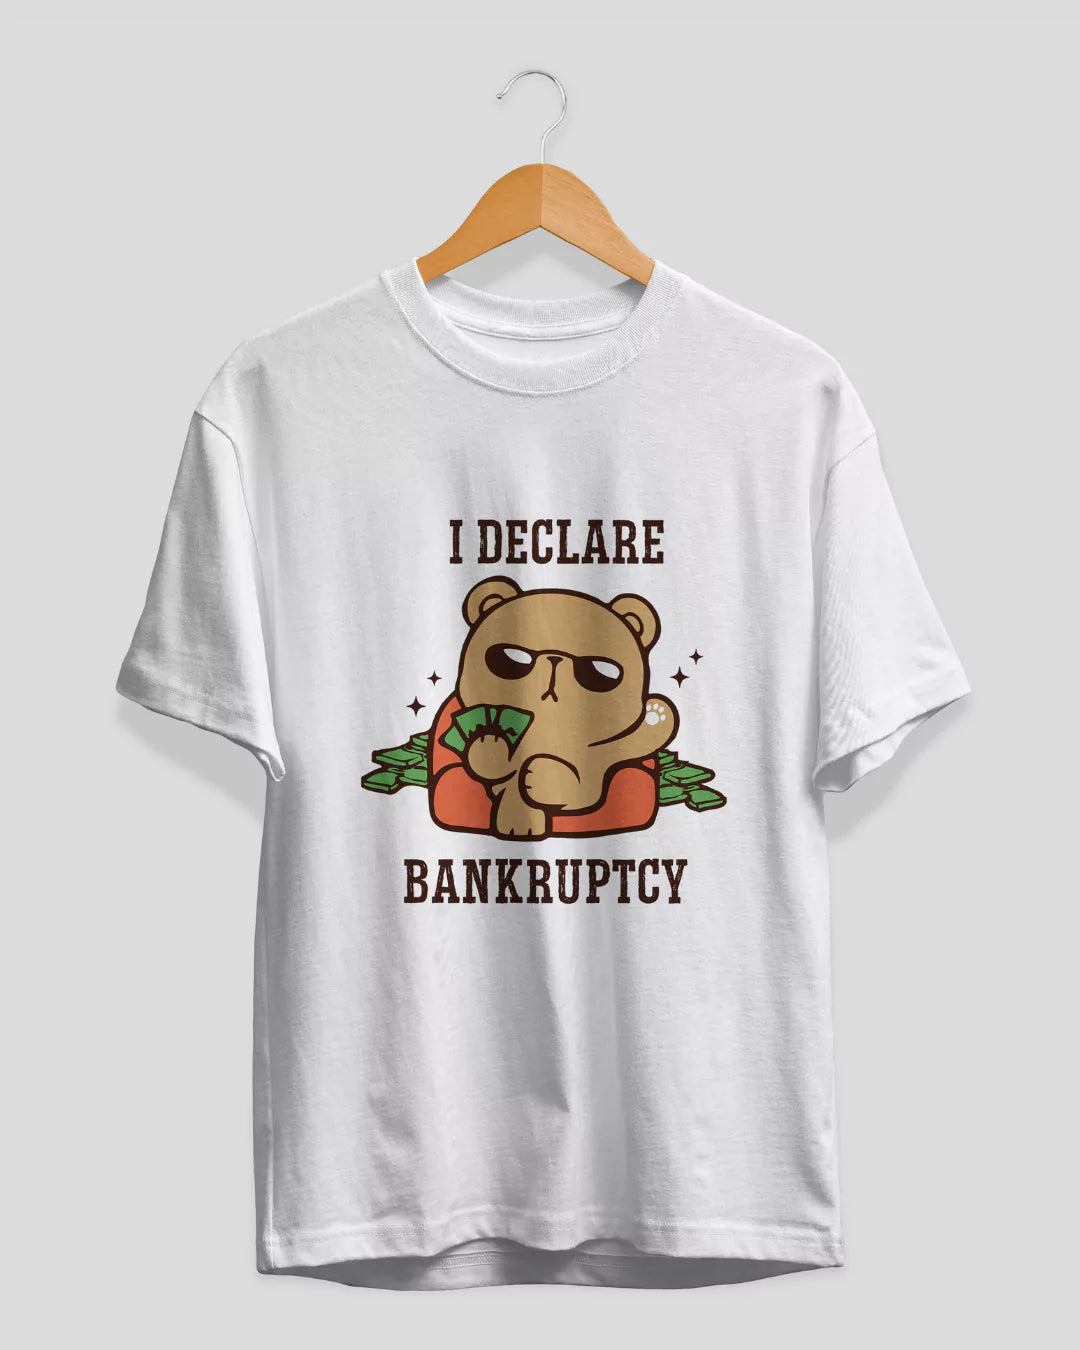 Bankruptcy T-Shirt